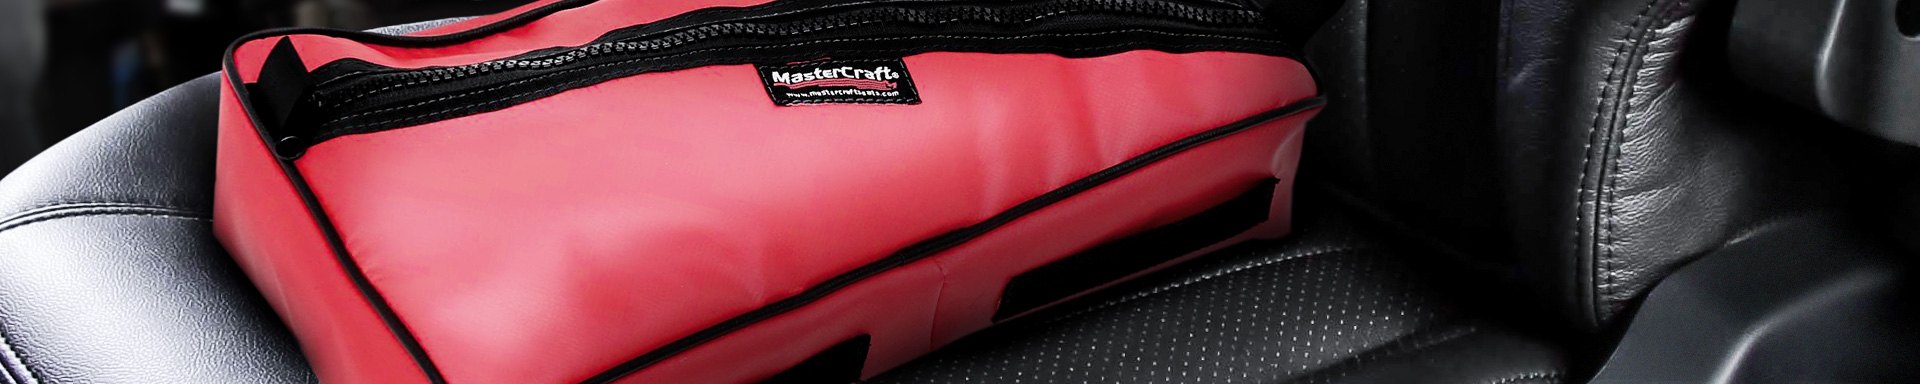 MasterCraft Safety Car Organizers